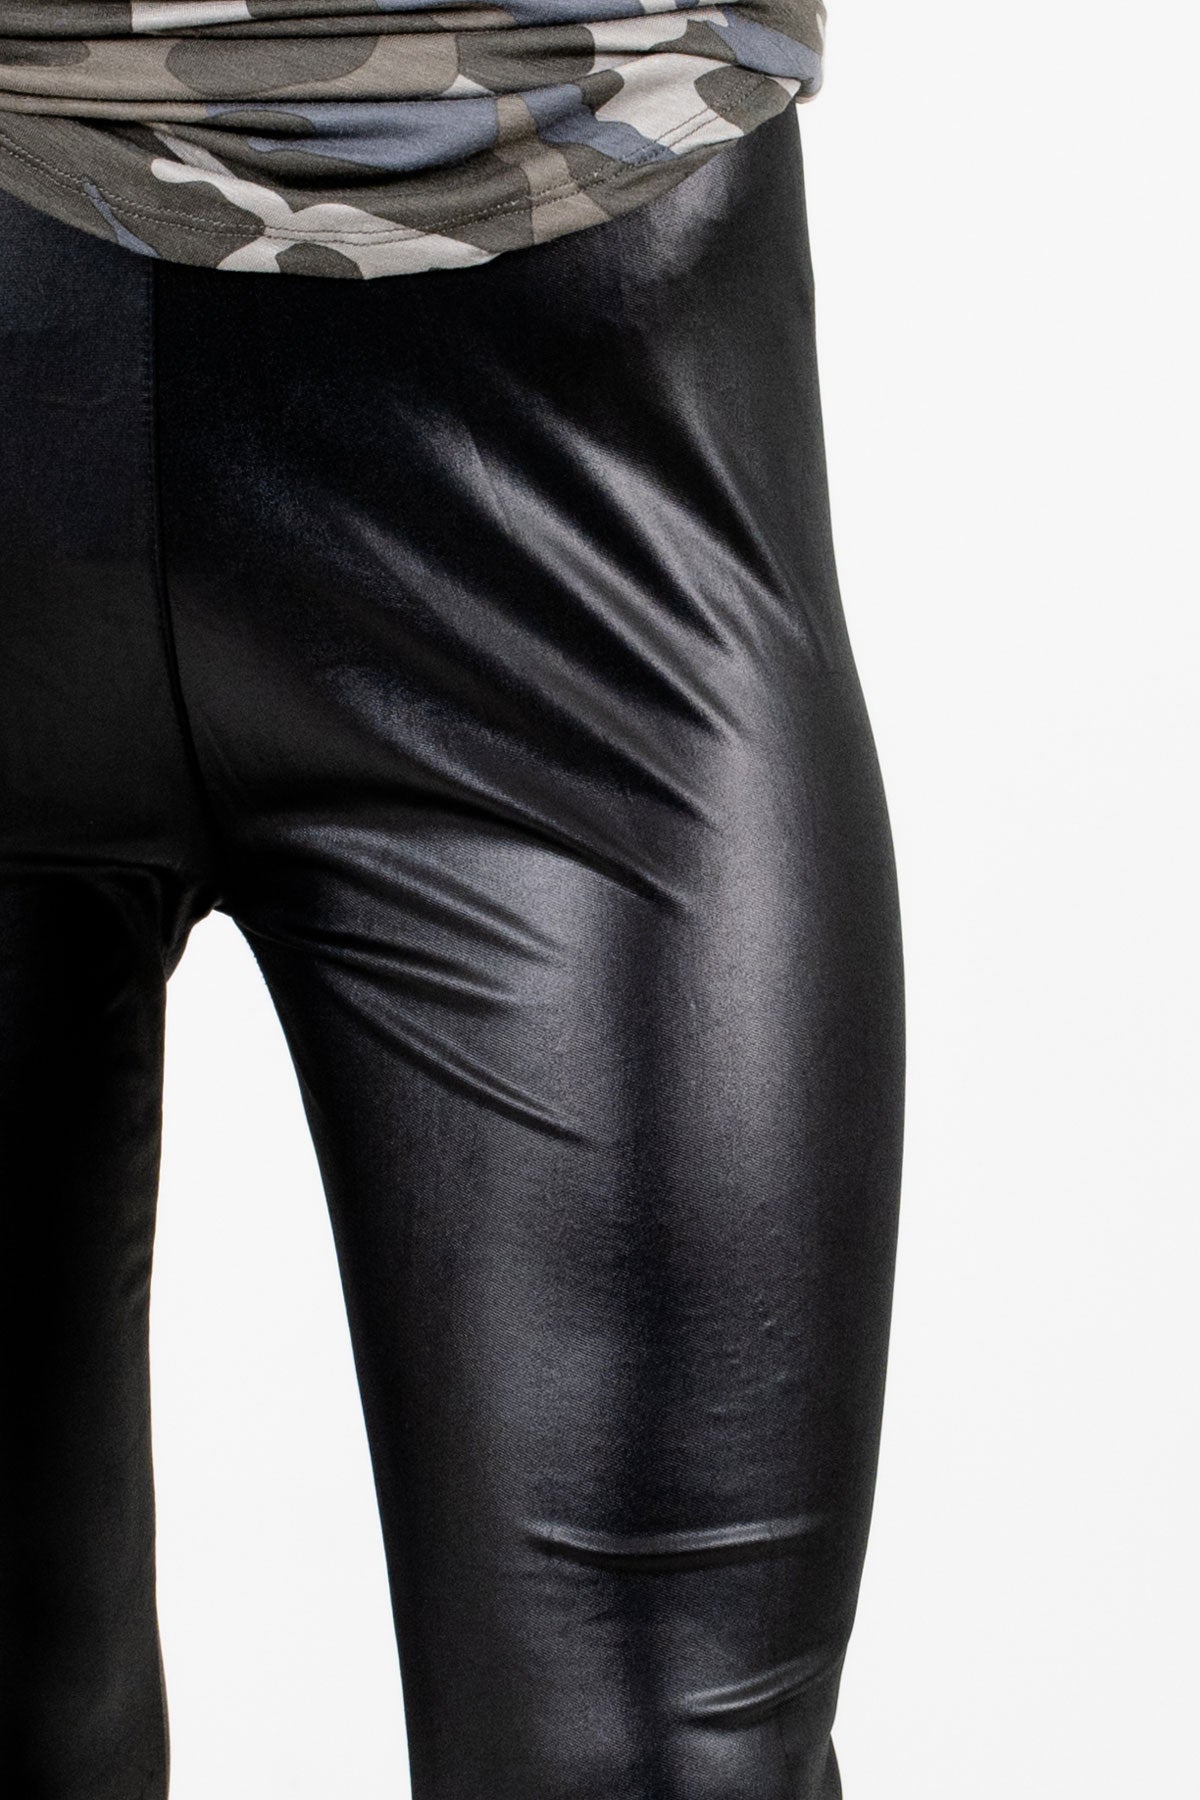 RD Style Black 'Fanita' Faux Leather Pintuck Legging - Bellē Up